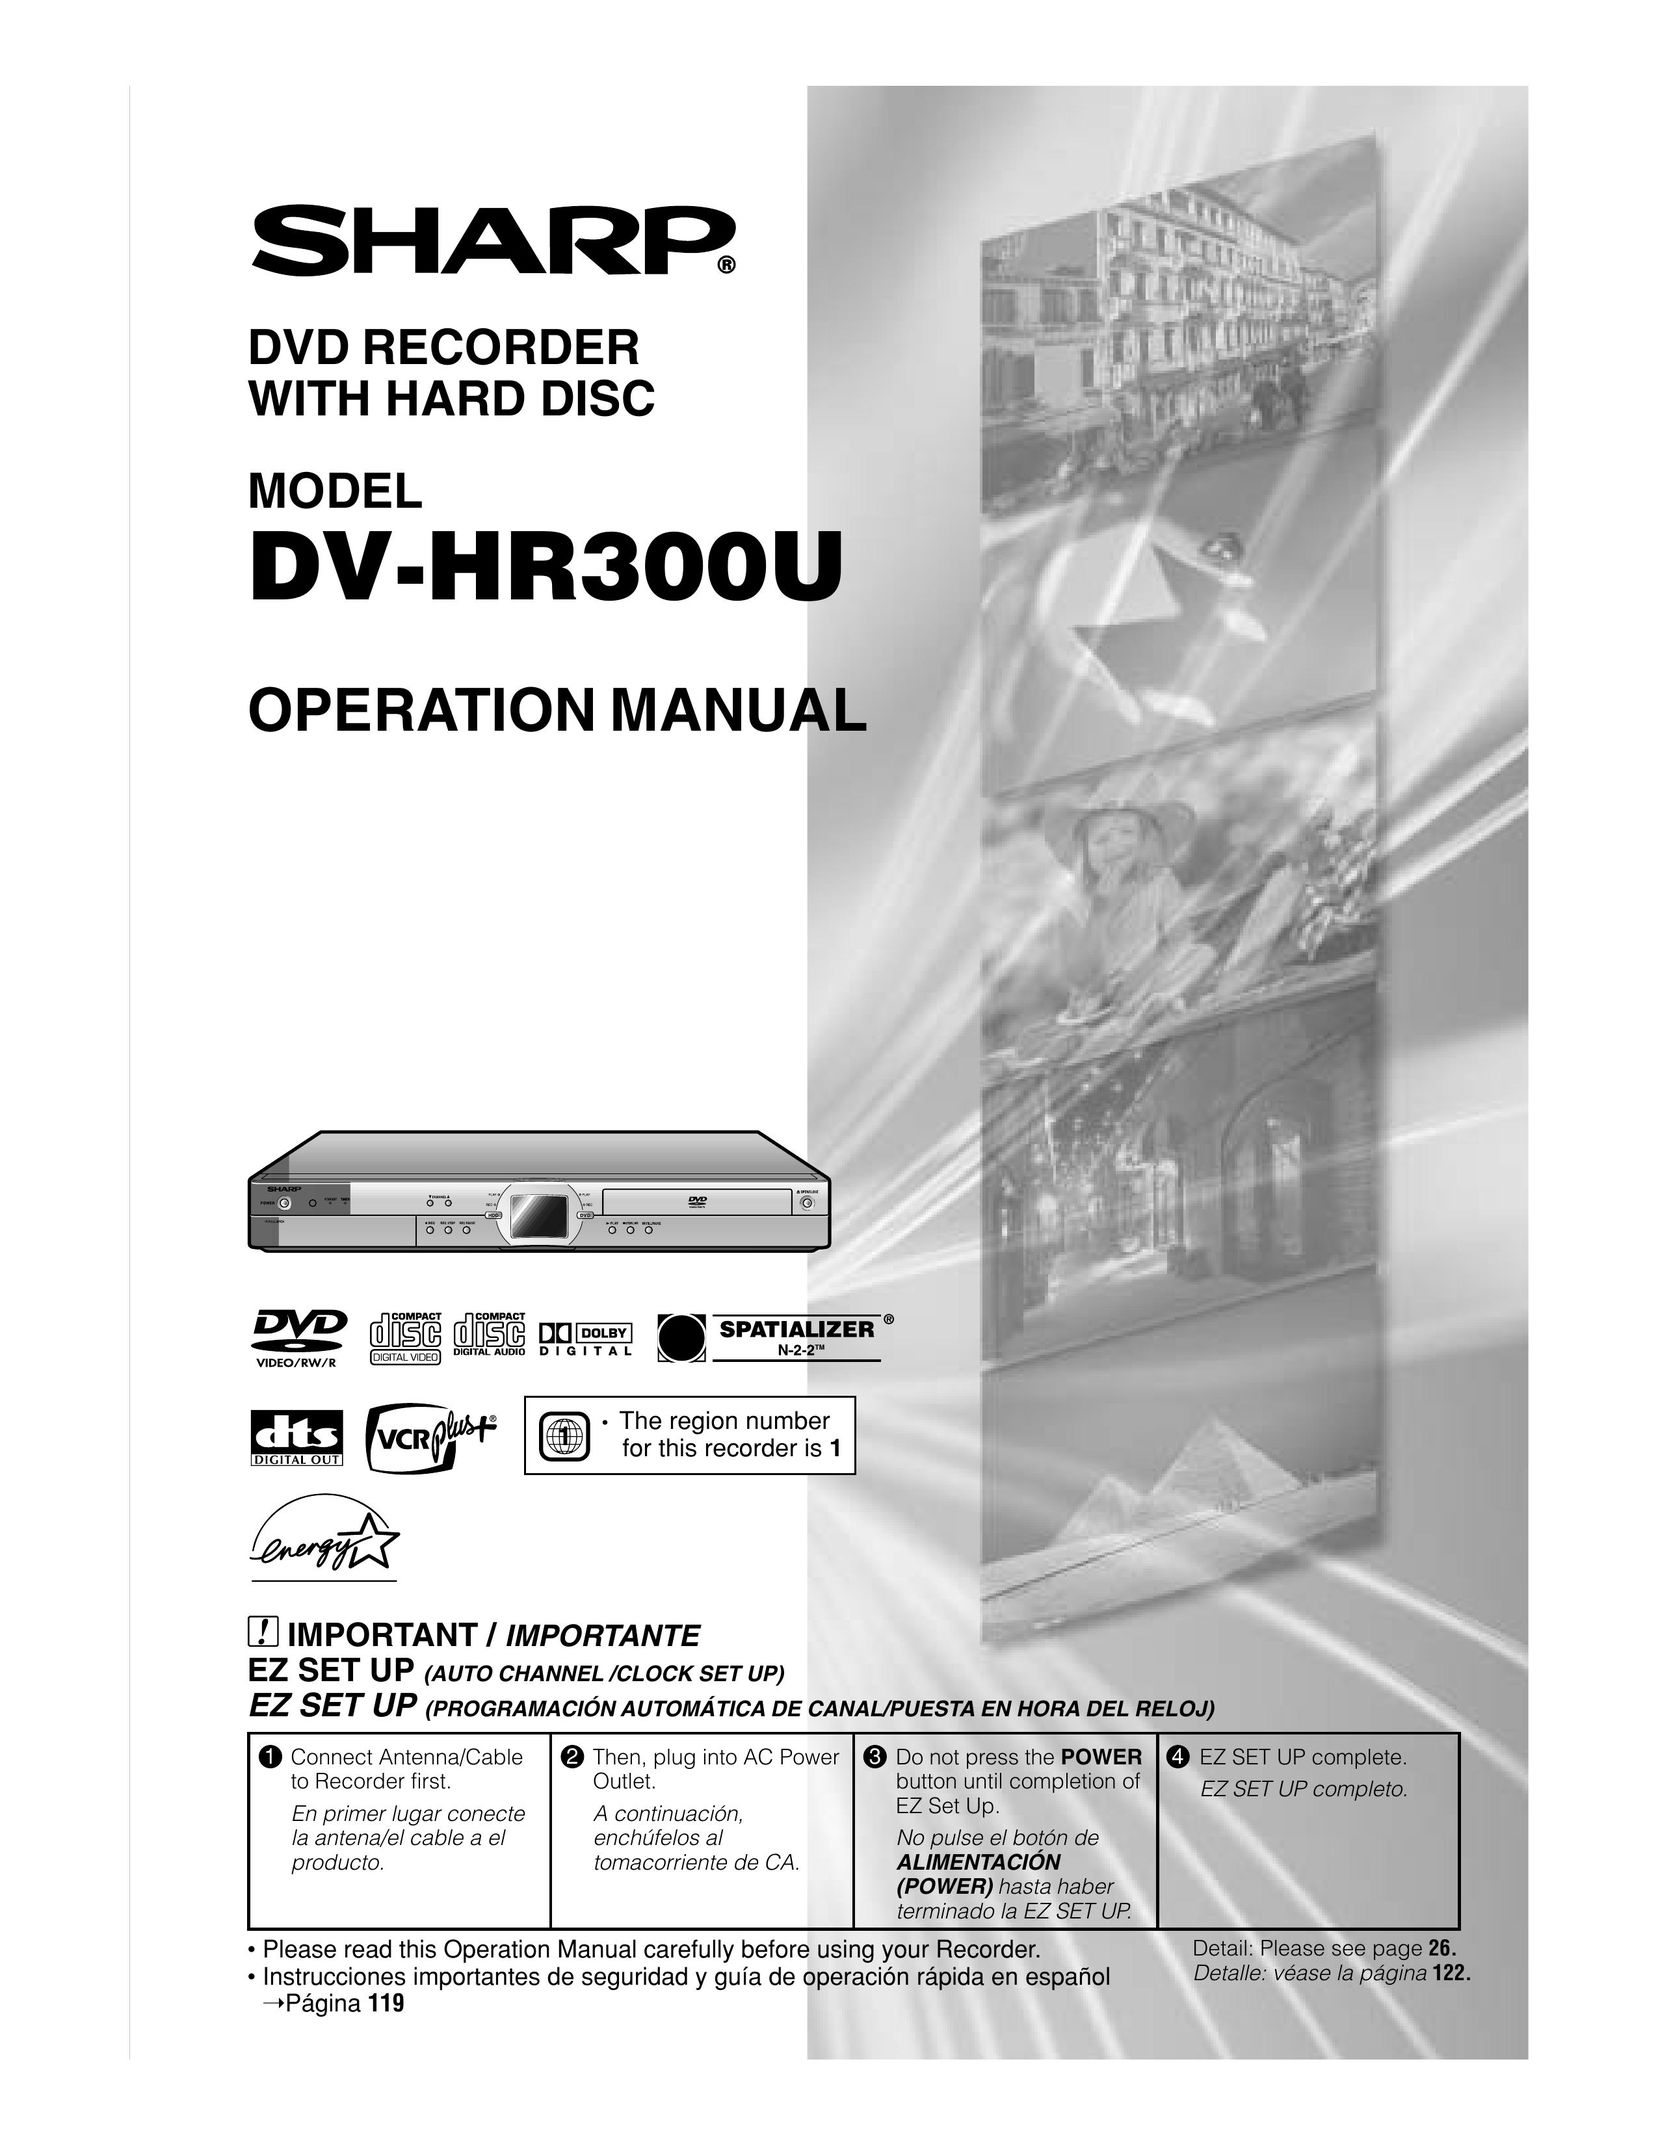 Sharp DV-HR300U DVD Recorder User Manual